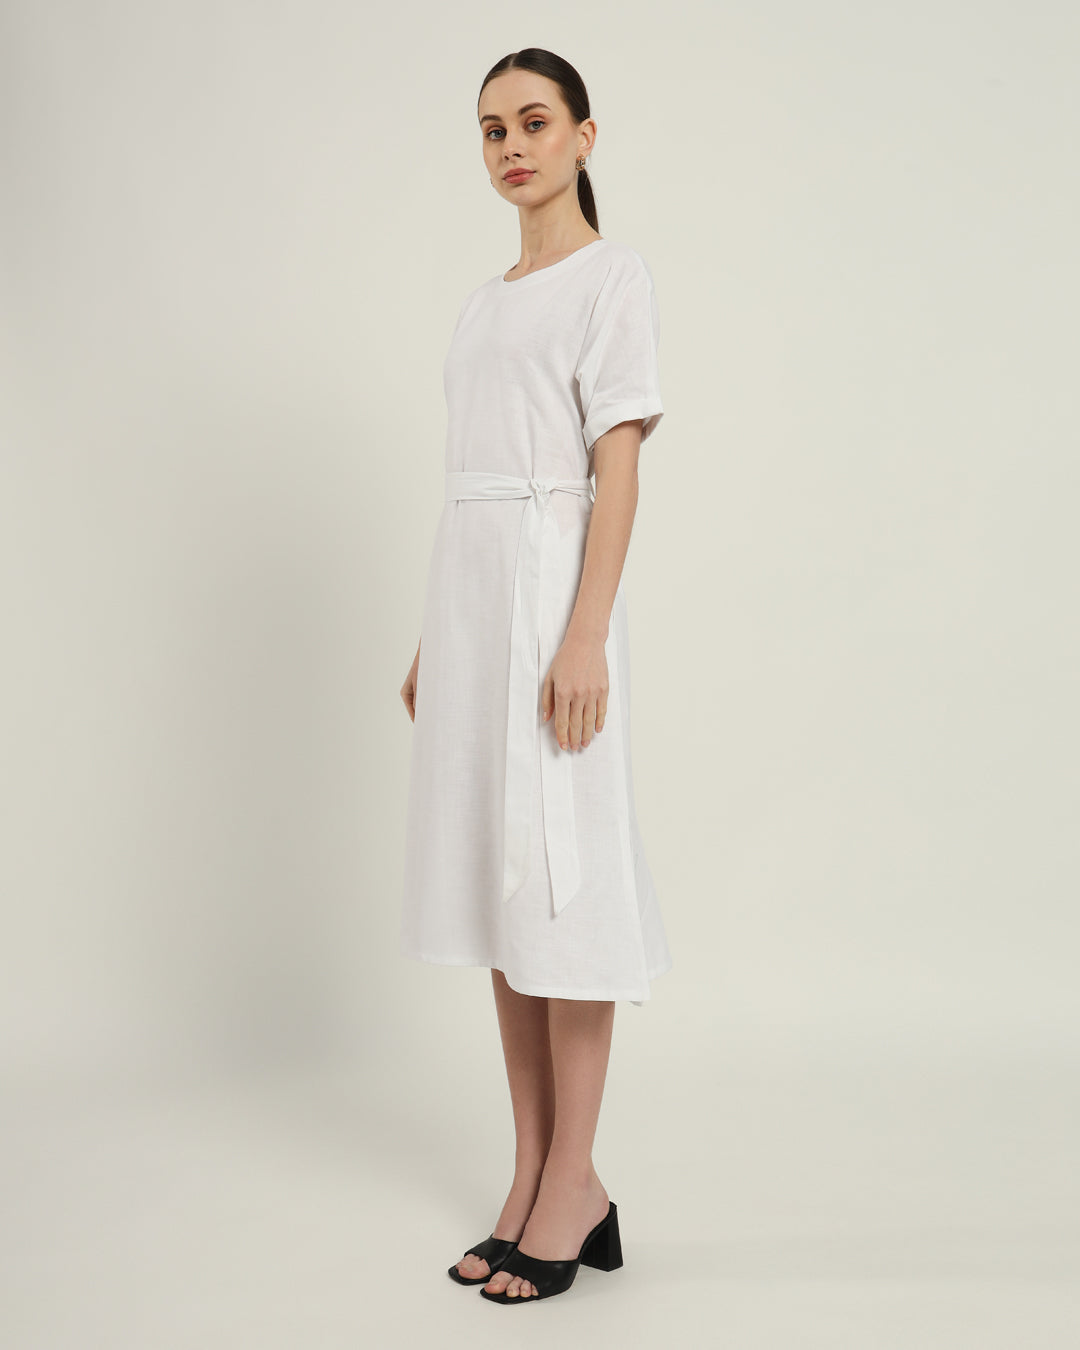 The Tayma Daisy White Linen Dress